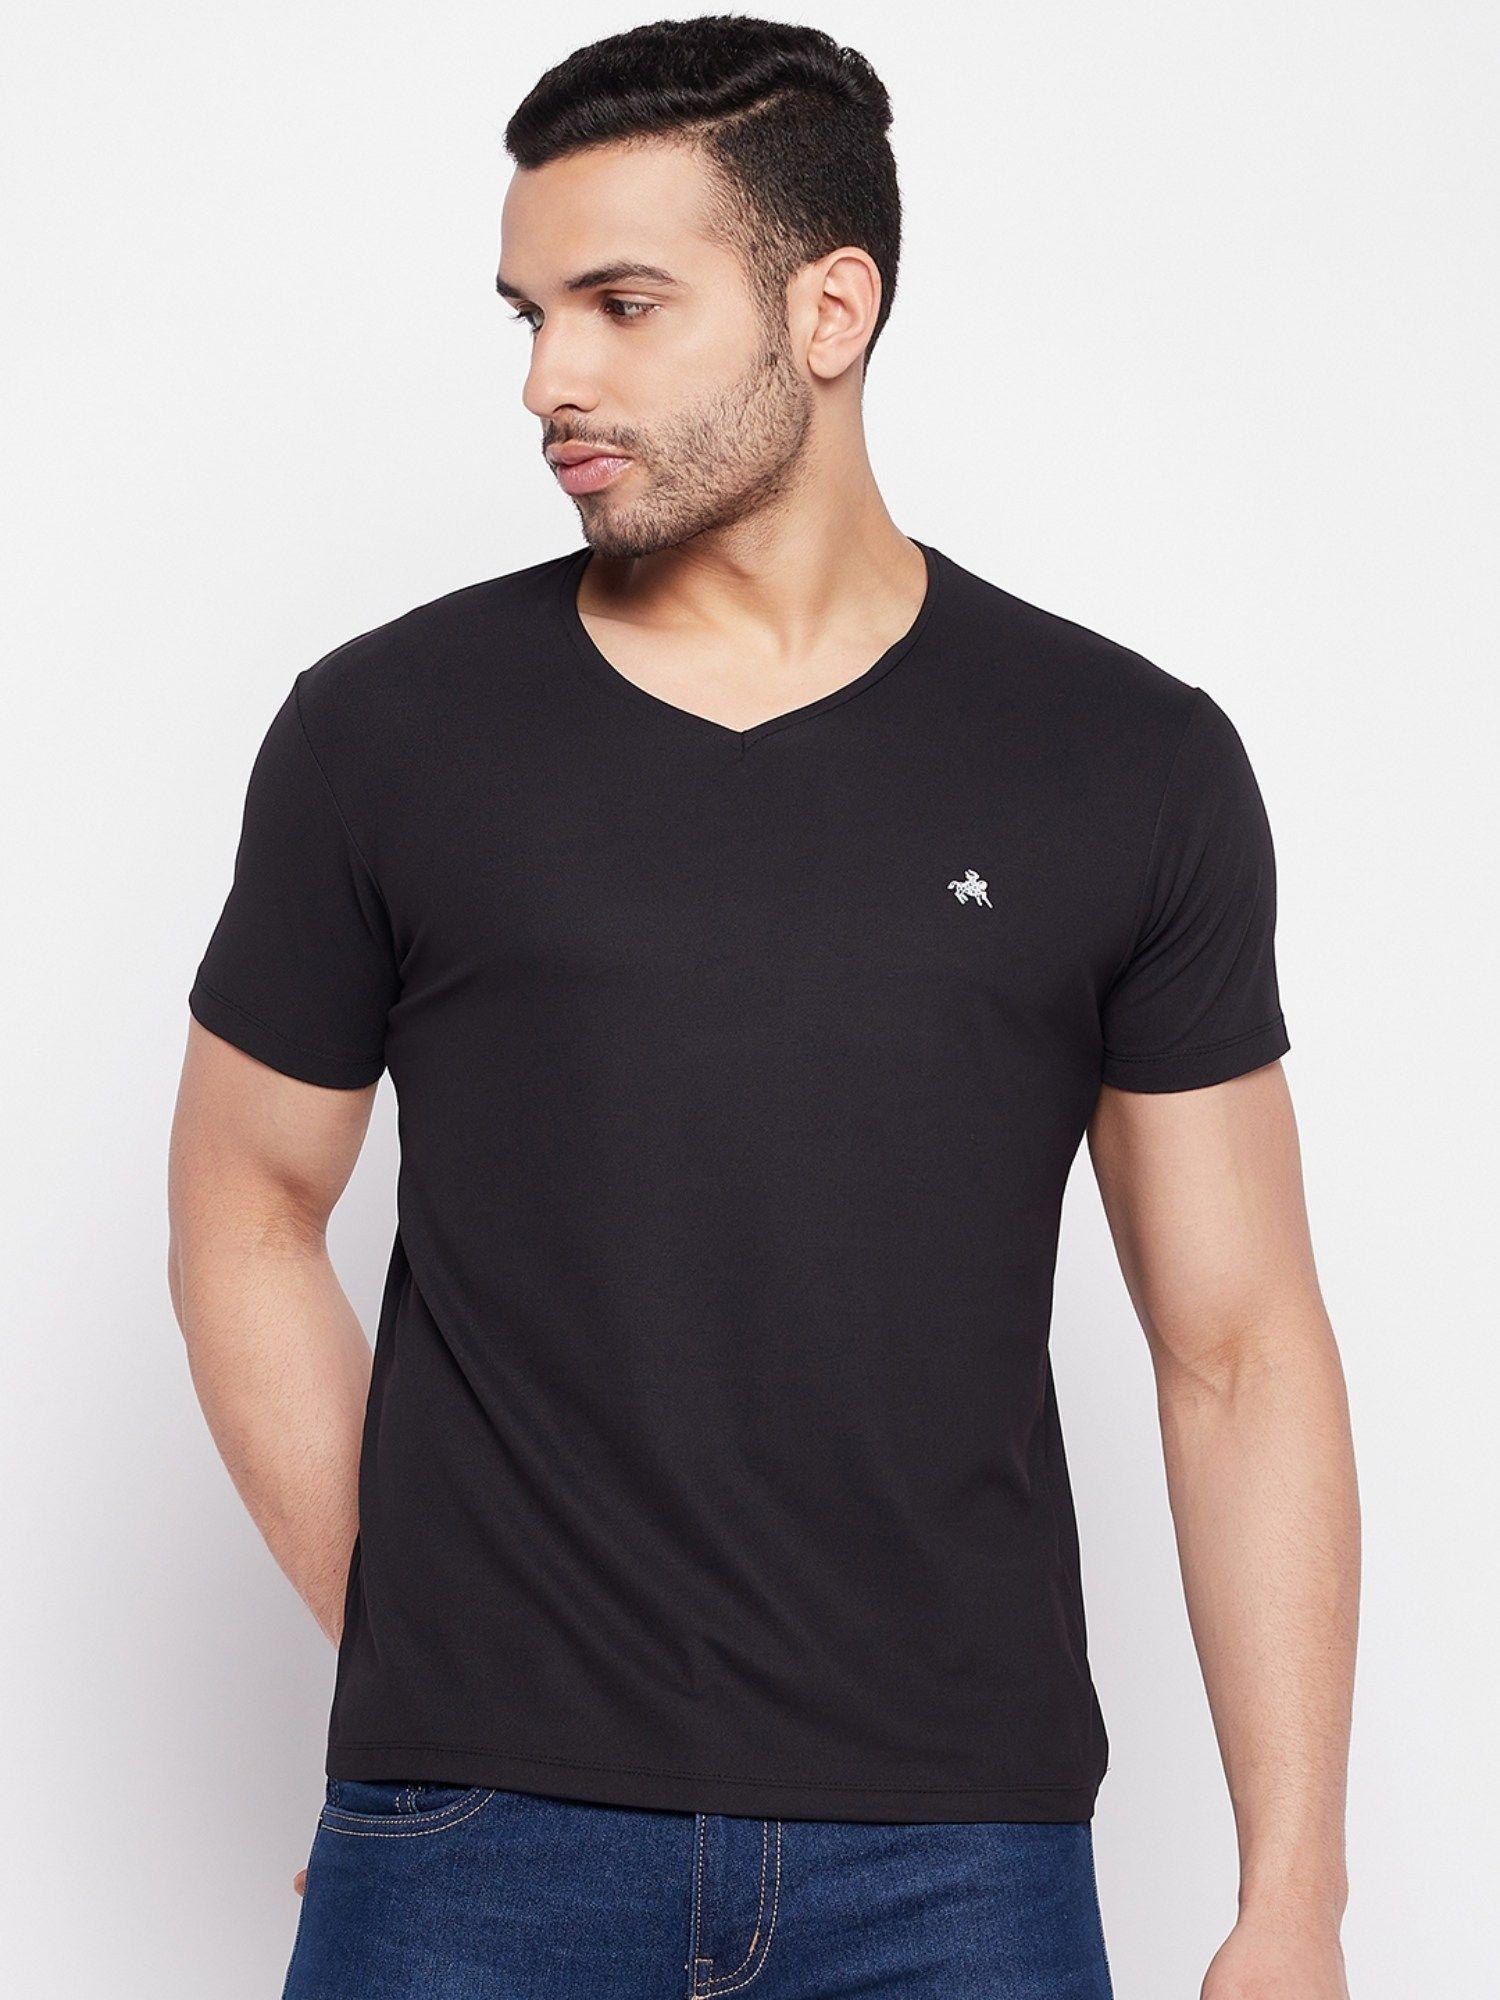 men's black printed v-neck t-shirt